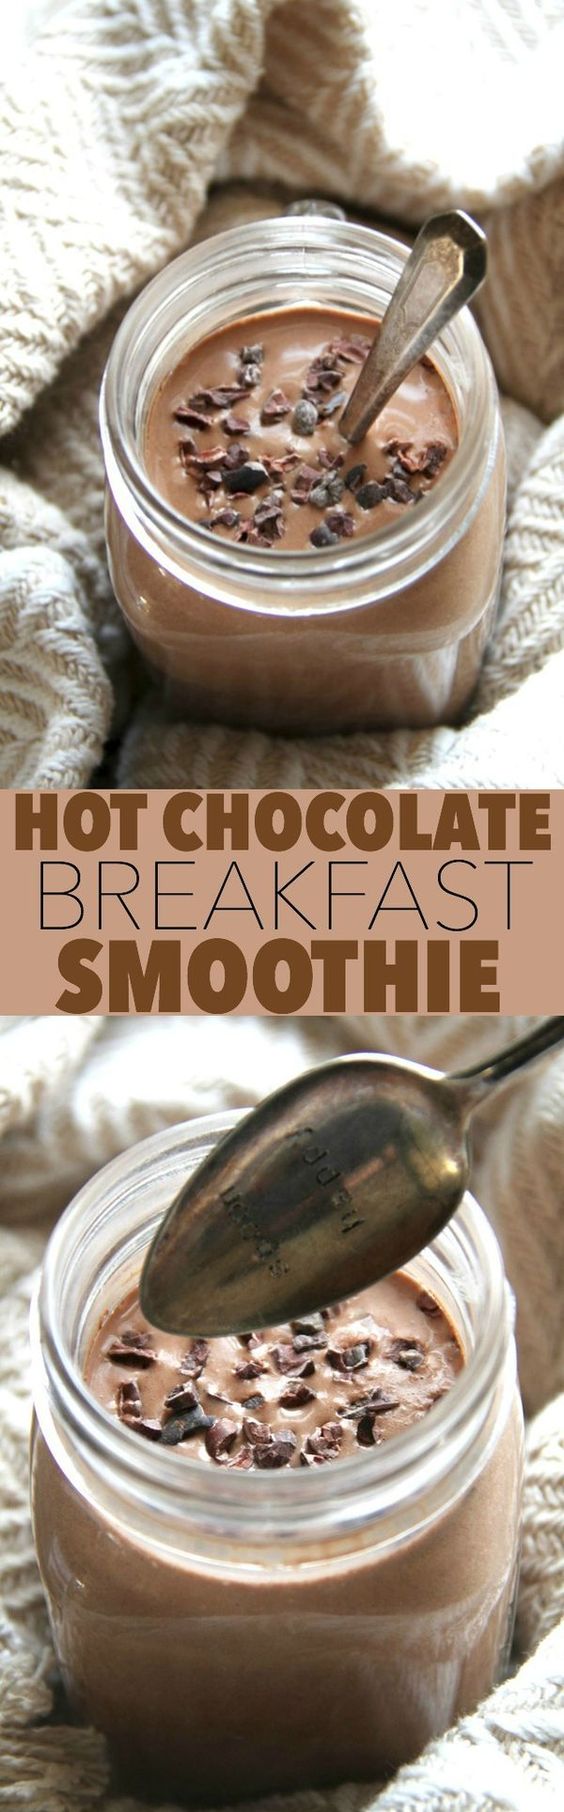 Healthy Skinny Hot Chocolate Breakfast Smoothie Recipe - More Easy Chocolate Smoothie Recipes on this page